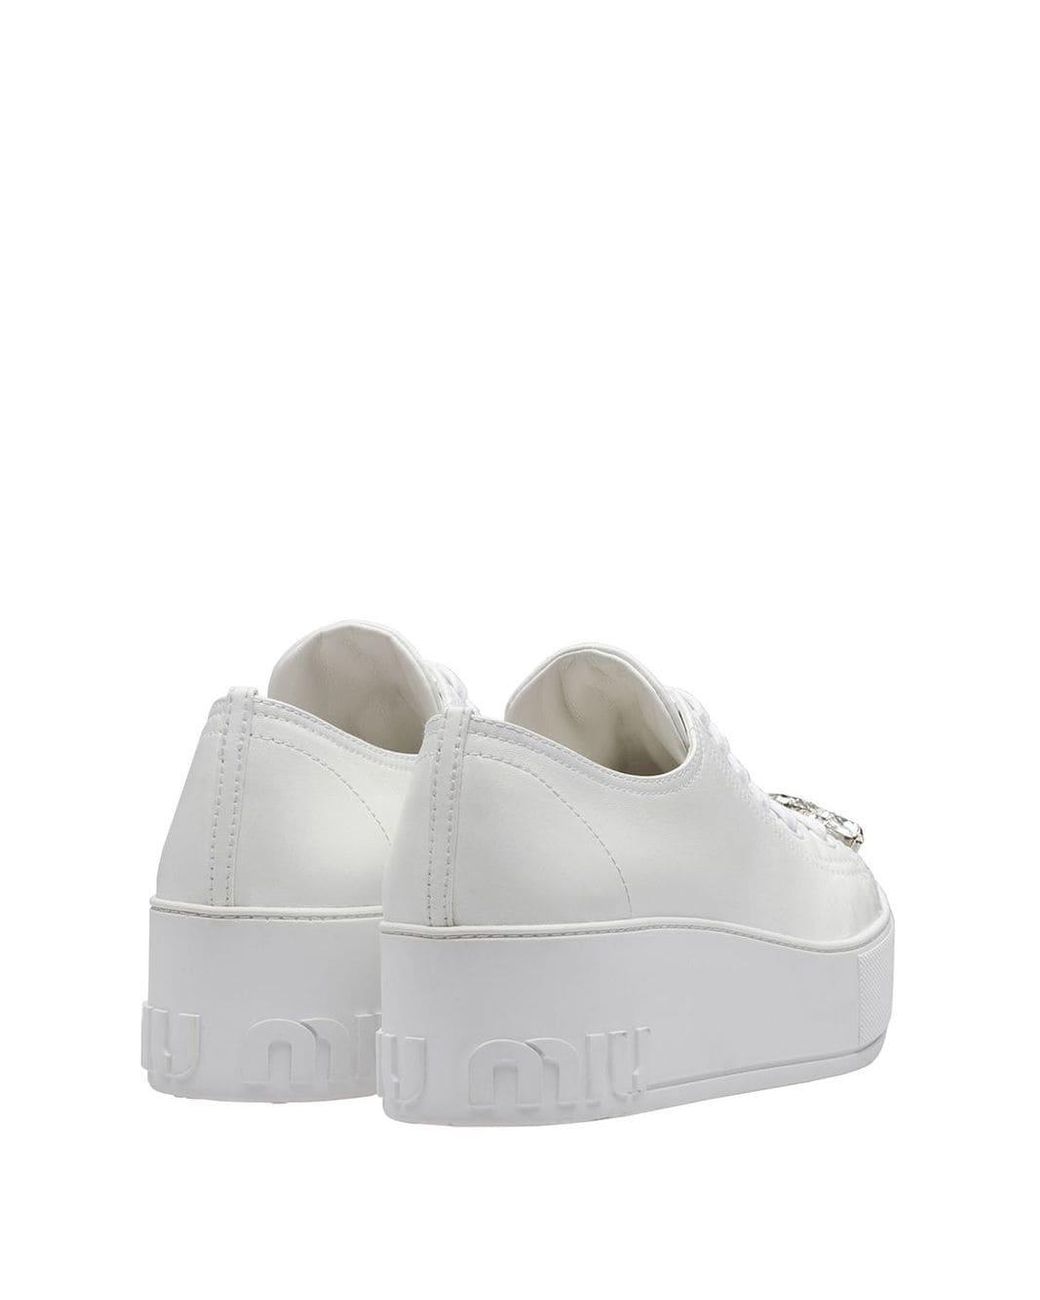 Miu Miu Swarovski Crystal Toe-cap Sneakers in White | Lyst